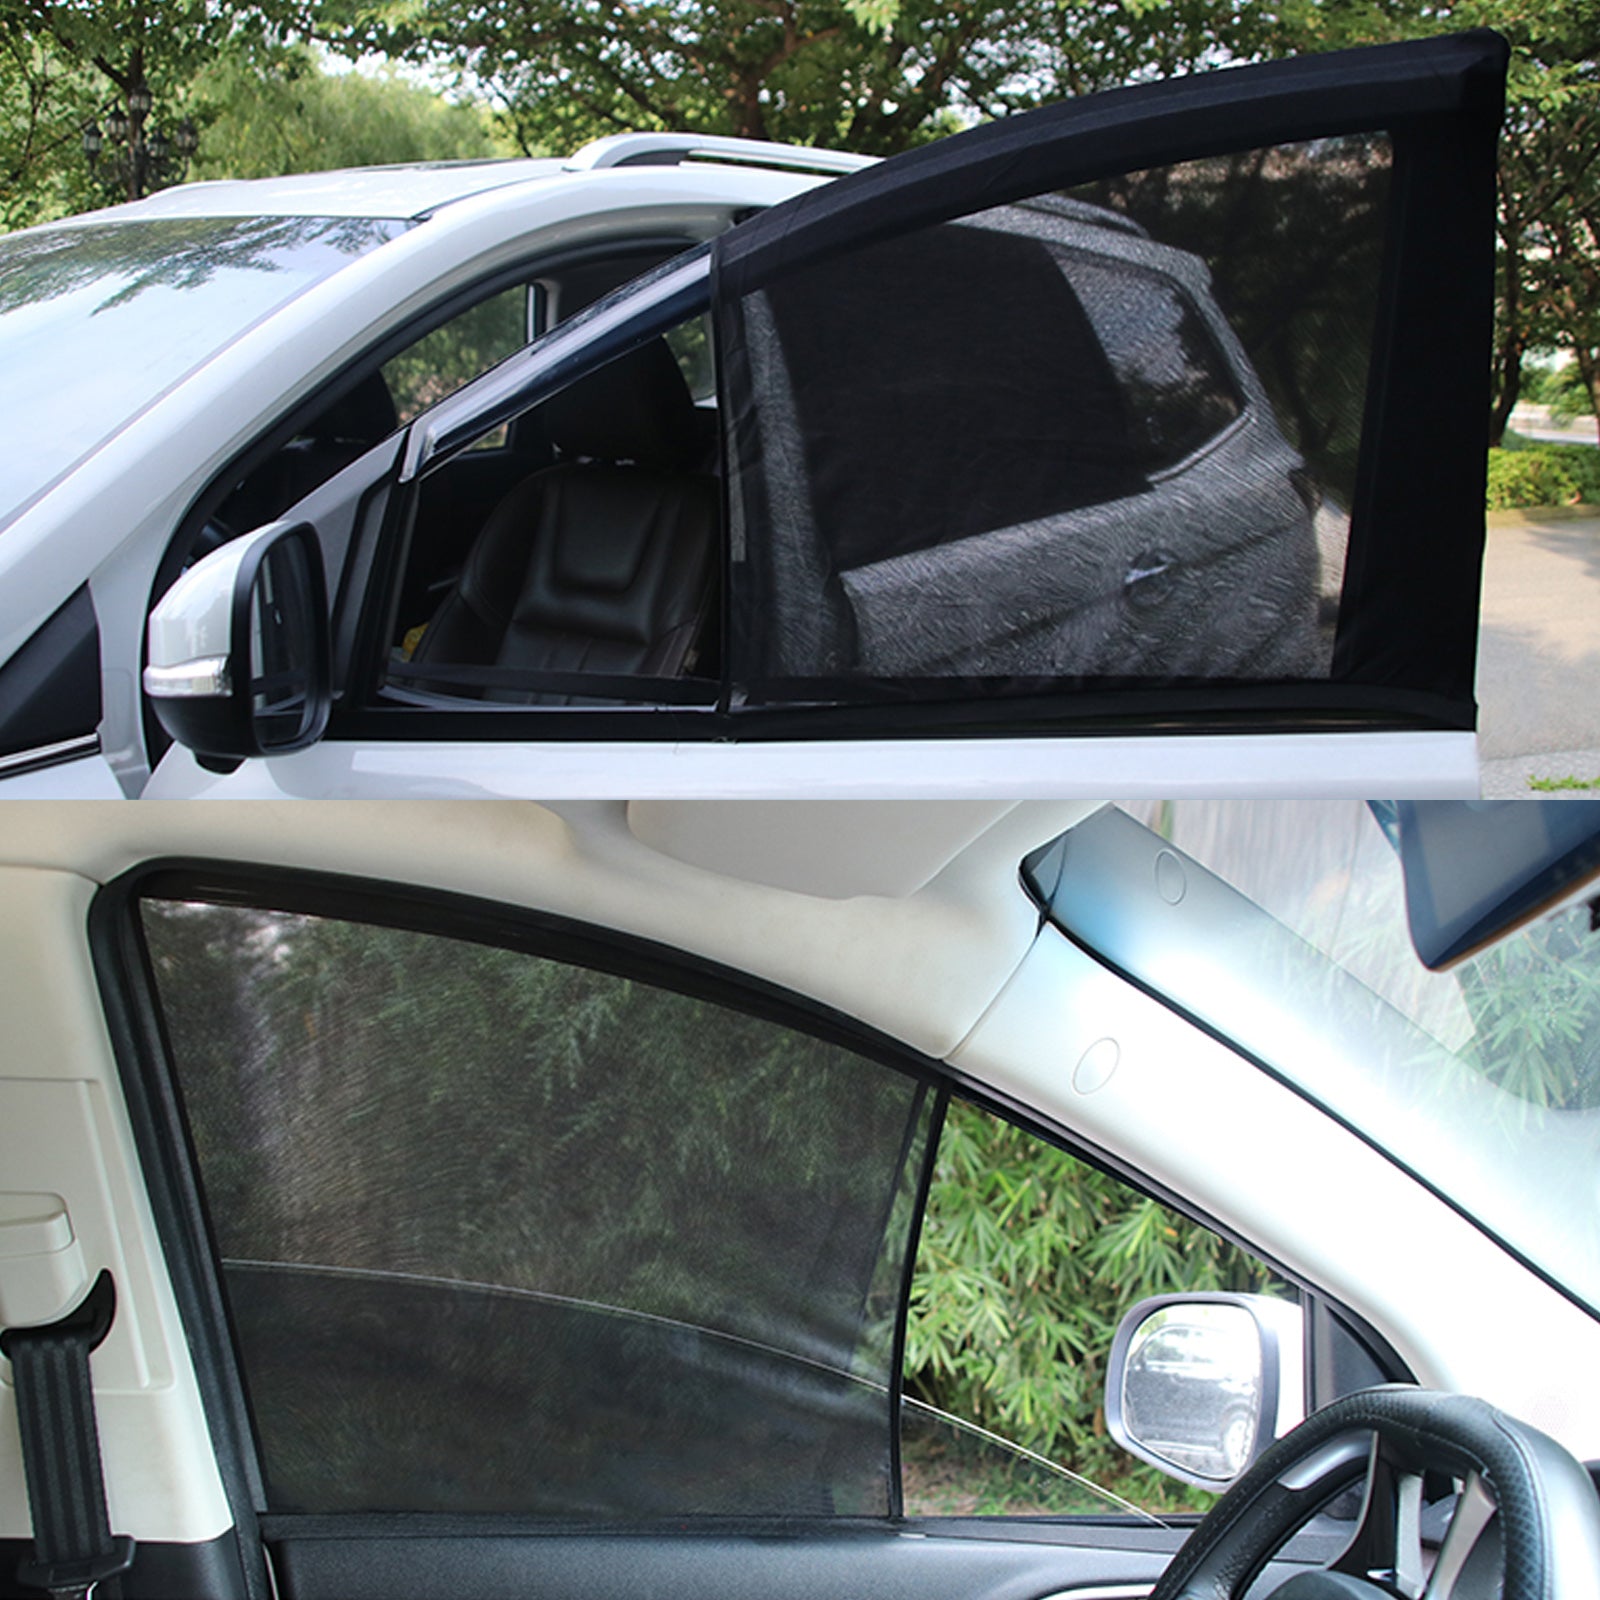 Yous Auto 4Pcs Car Window Sun Shades UV Protection Front/Rear